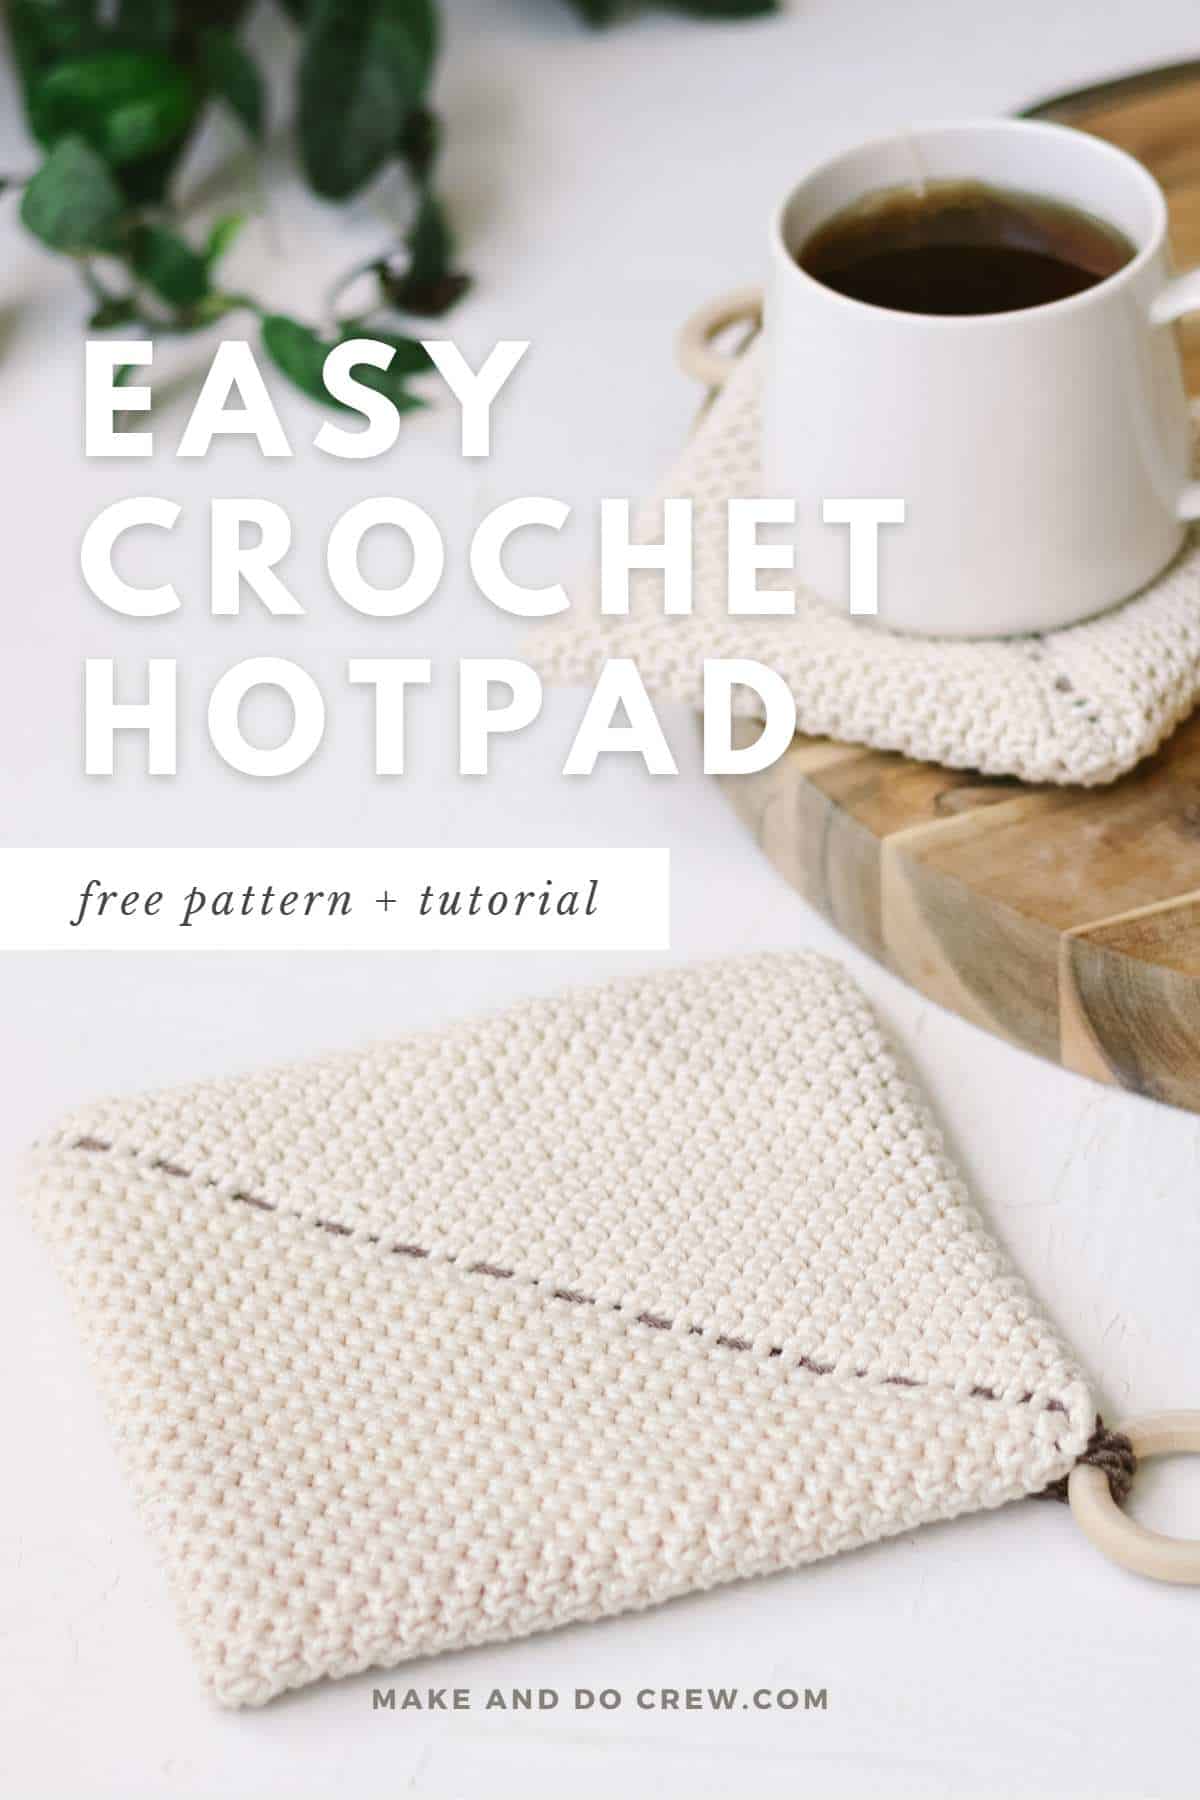 Two crochet hotpads.